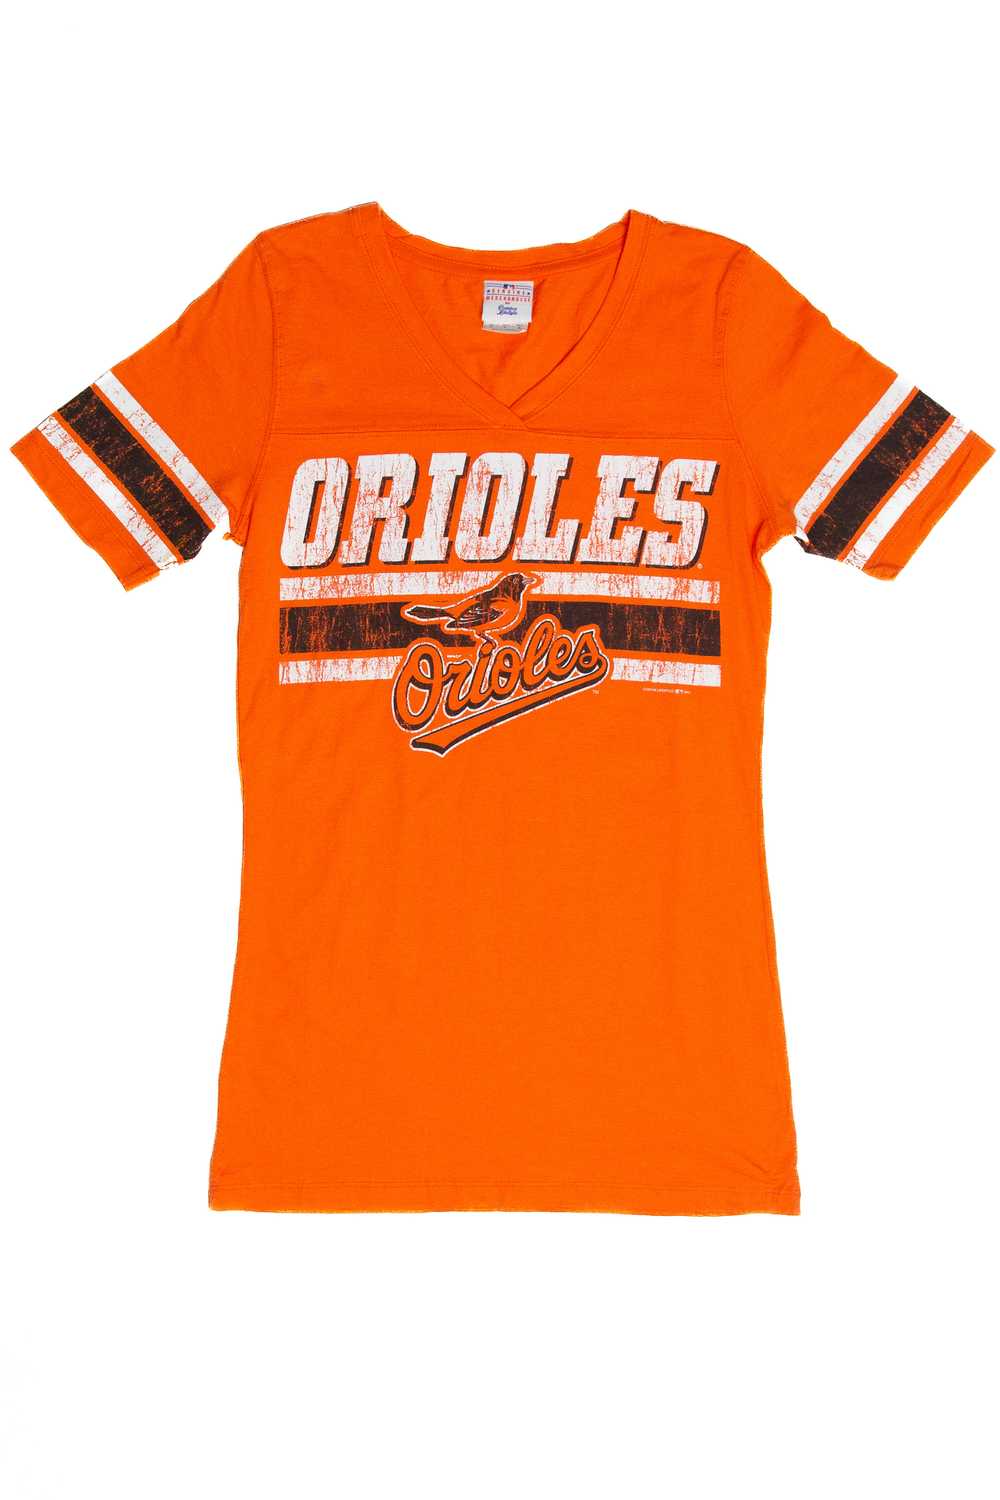 Baltimore Orioles T-Shirt - image 1